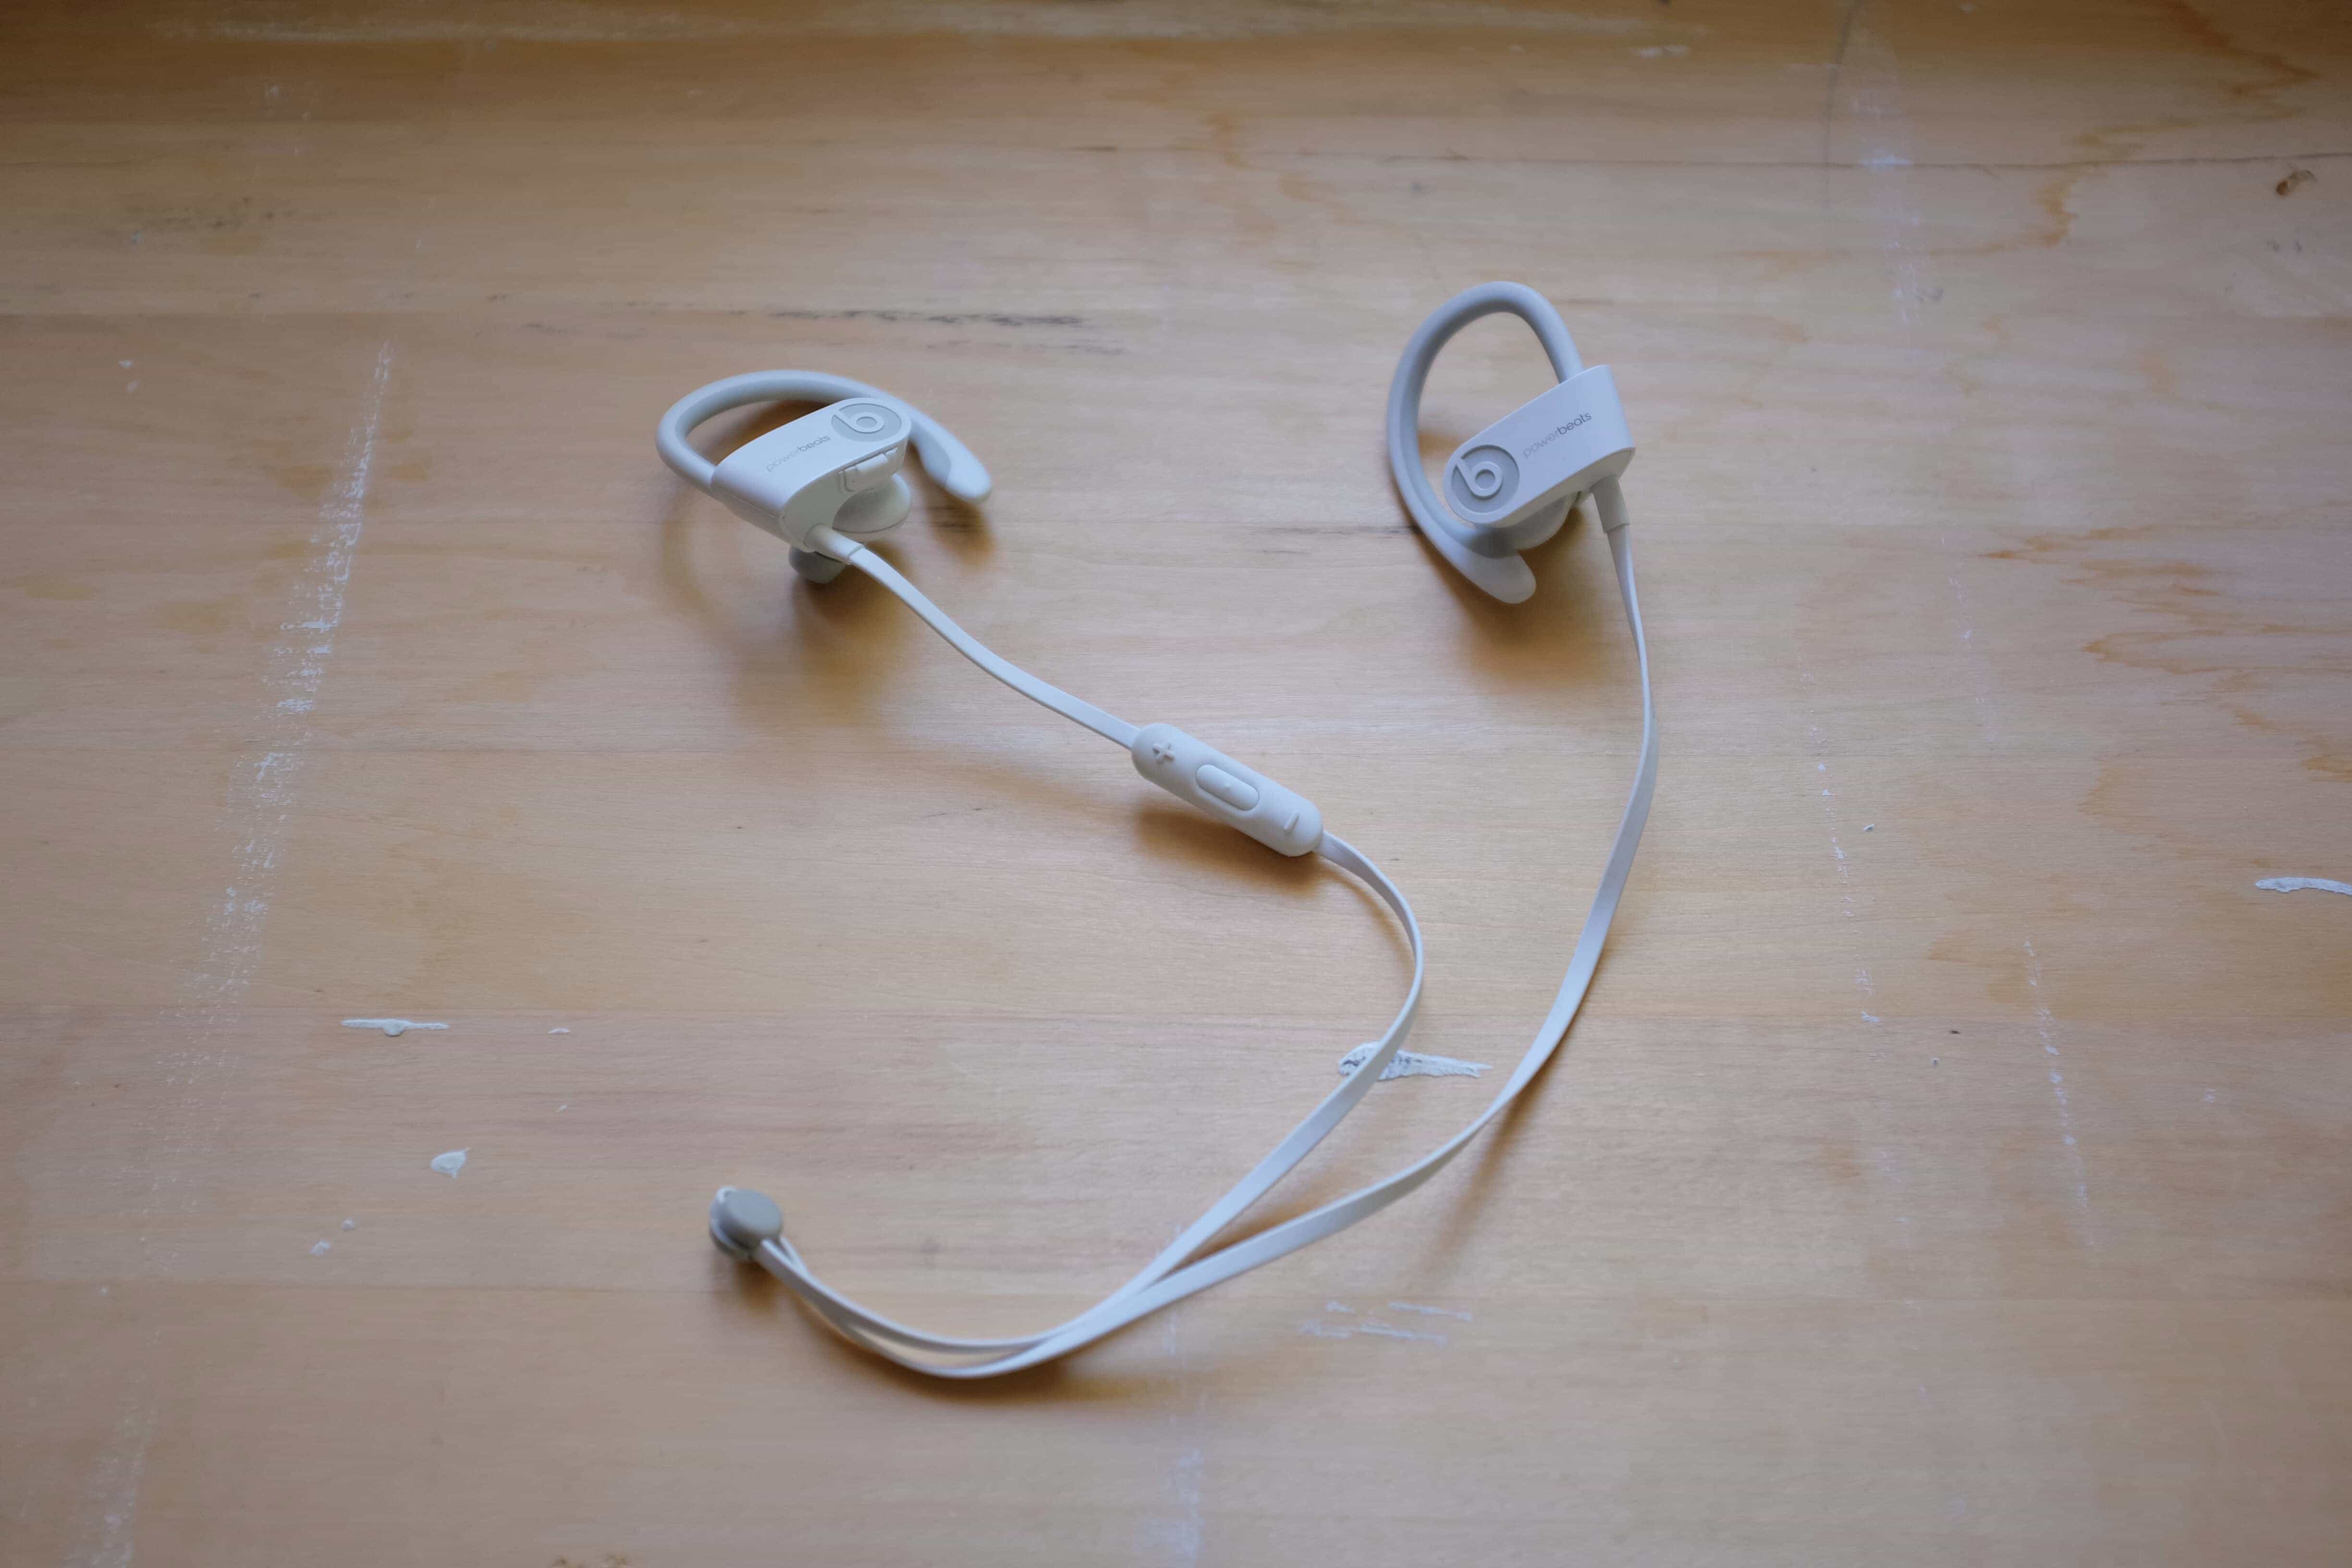 PowerBeats Wireless Headphones